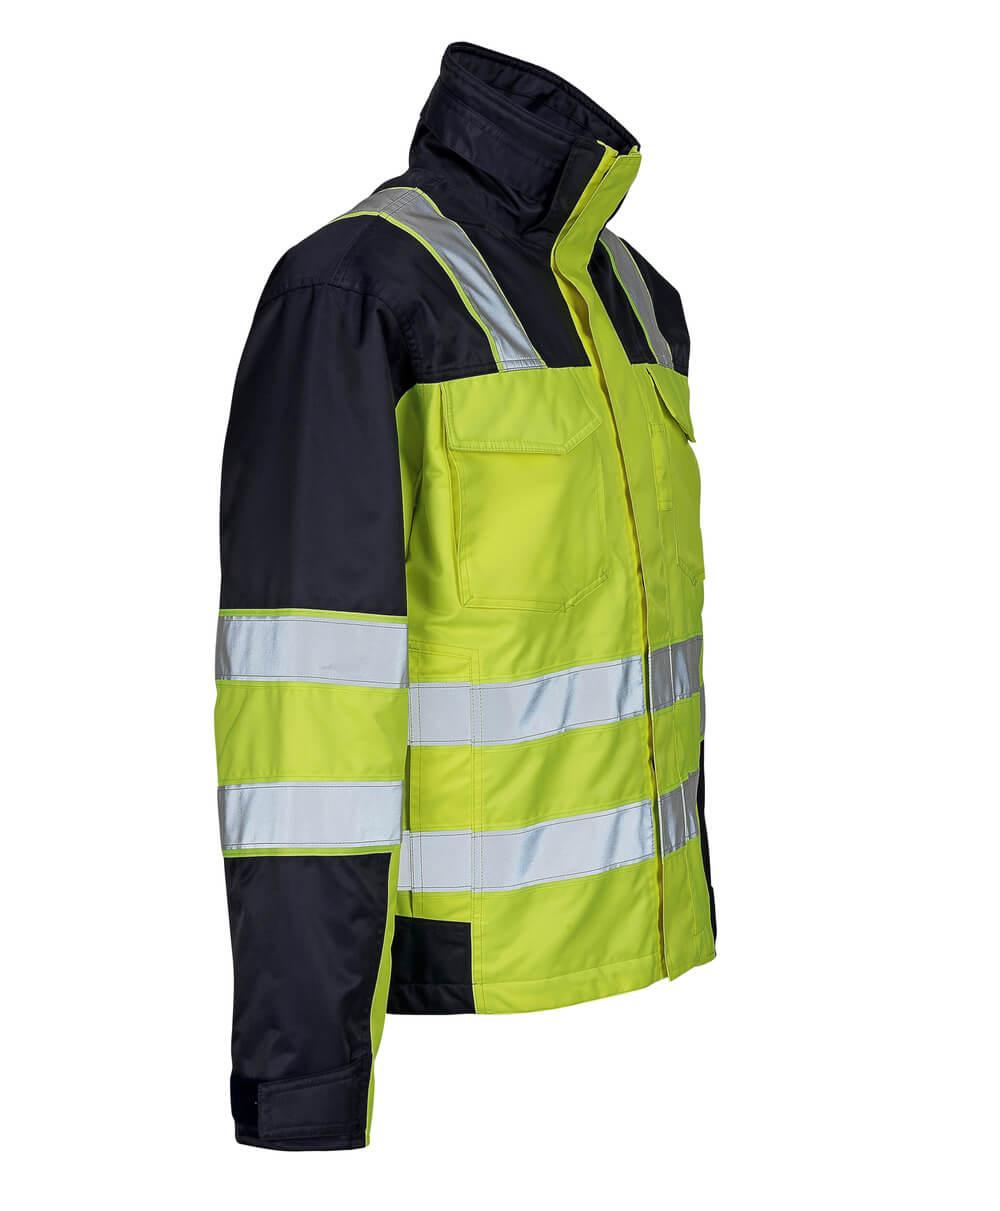 Mascot Genova Winter Jacket - Access and Safety Store